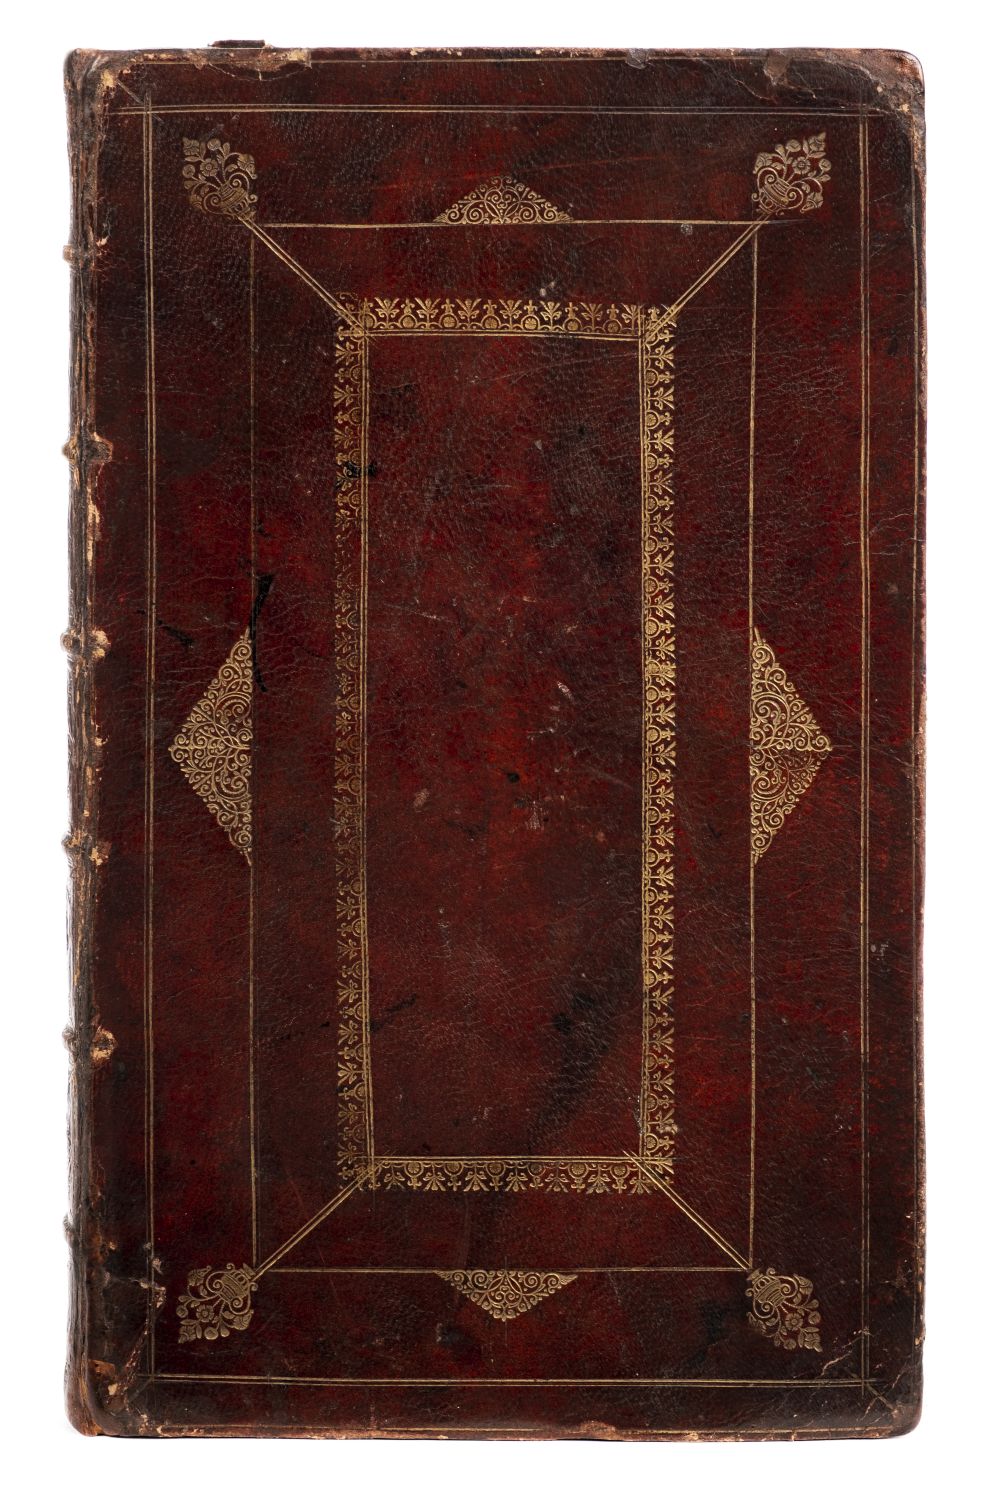 Philips (Katherine). Poems, 1669, contemporary red goatskin gilt